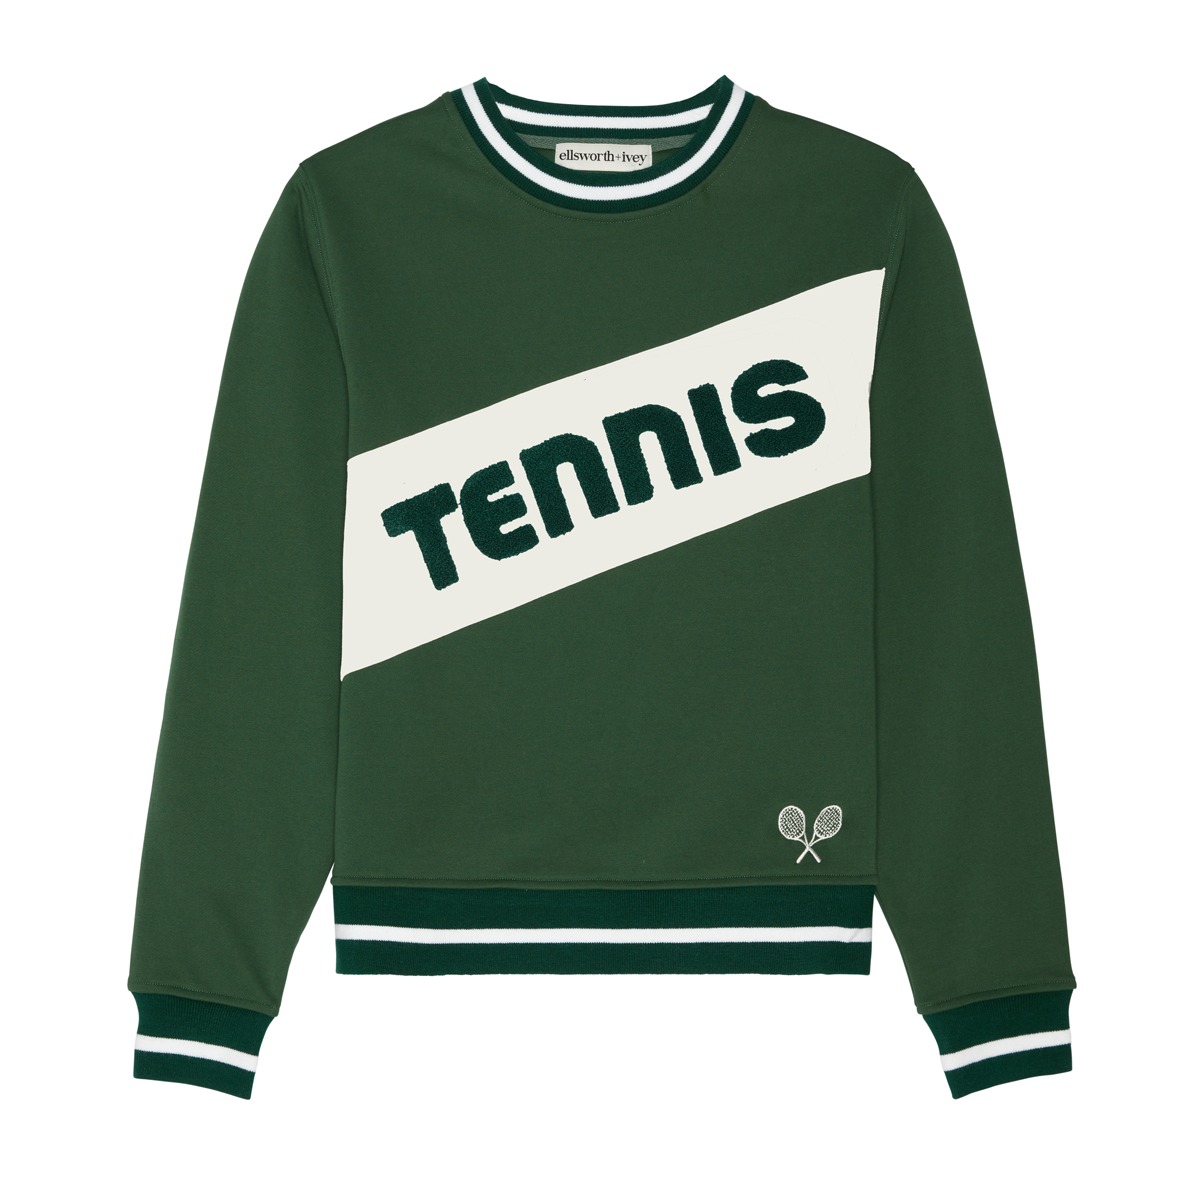 Ellsworth + Ivey Women's Green Retro Block Tennis Sweatshirt